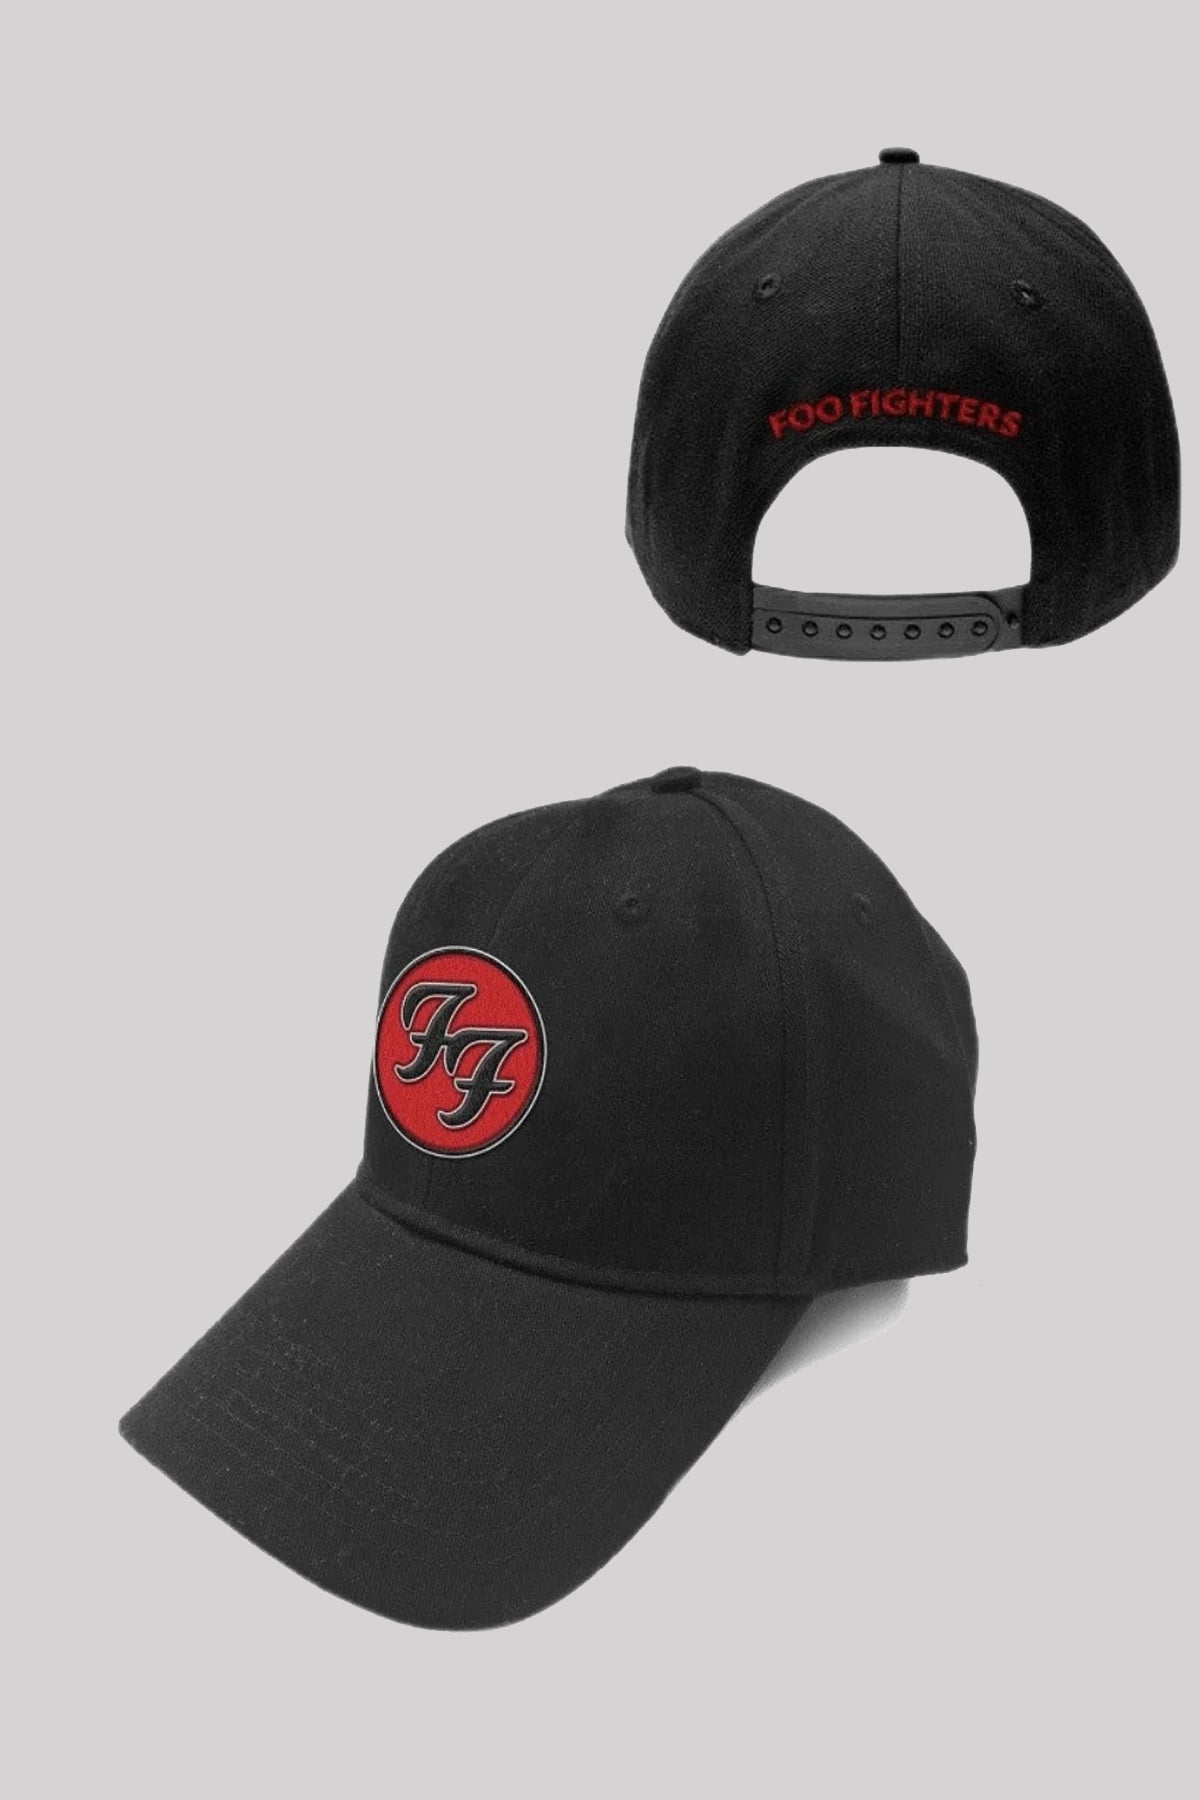 Foo Fighters Unisex Baseball Cap: Ff Logo